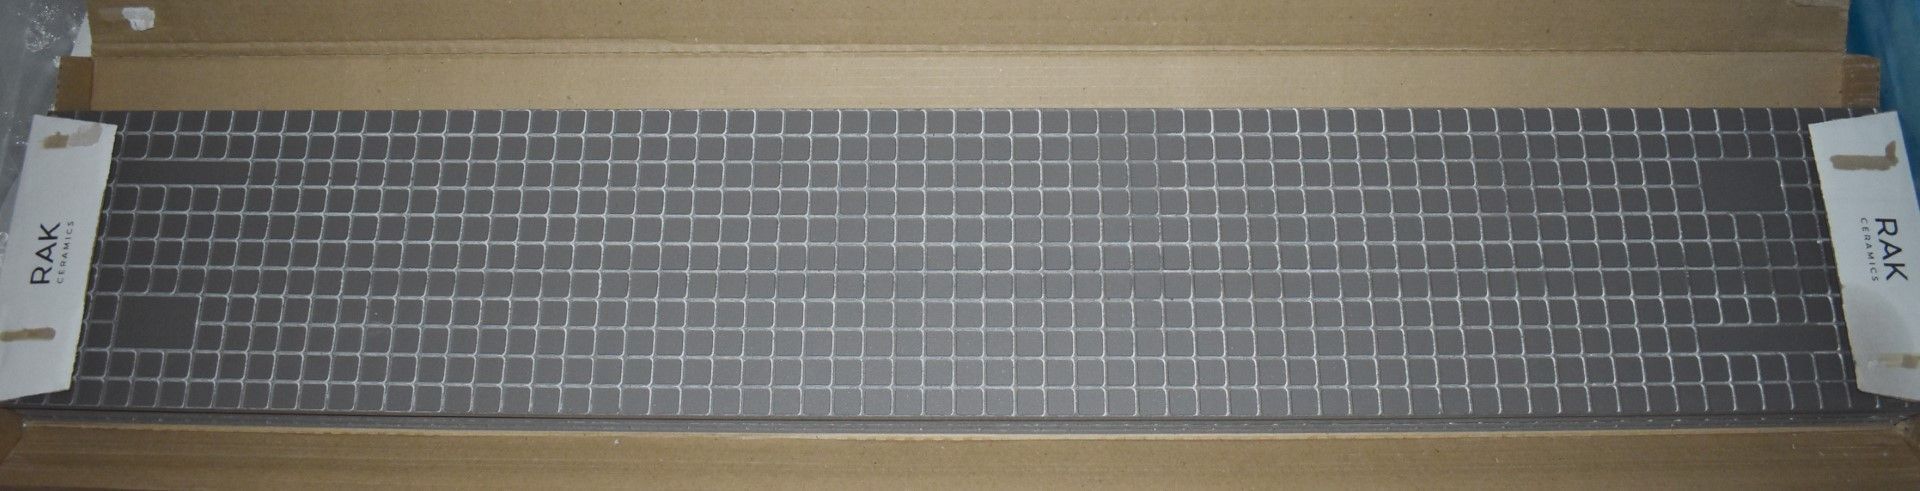 12 x Boxes of RAK Porcelain Floor or Wall Tiles - M Project Wood Design in Dark Grey - 19.5 x 120 cm - Image 10 of 10